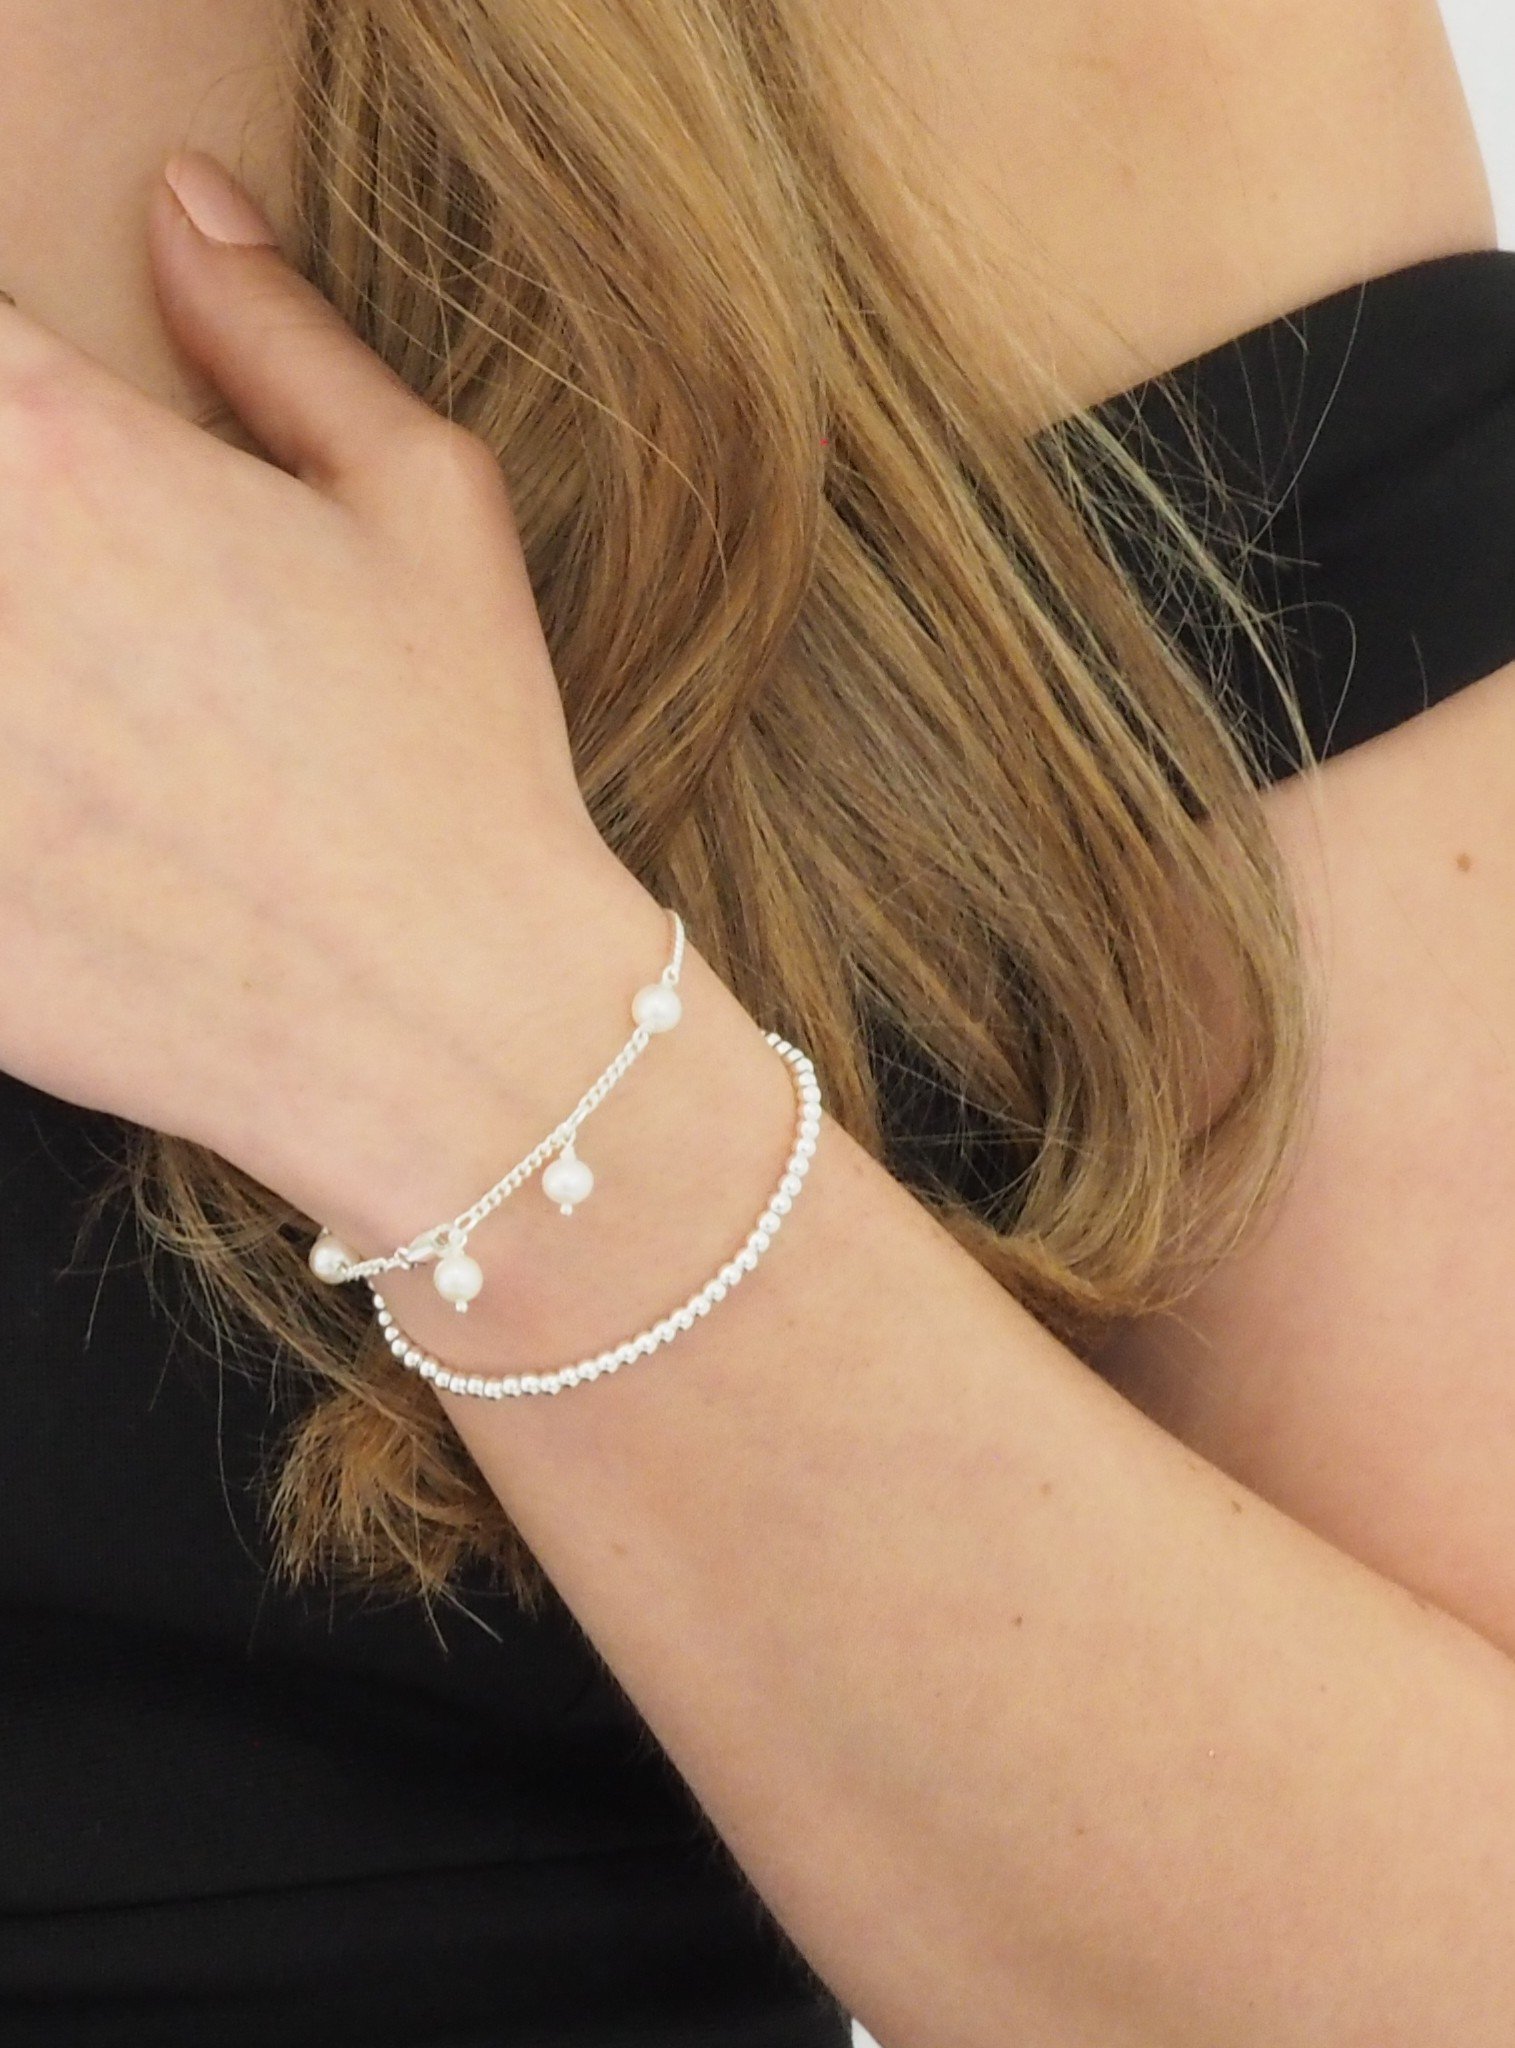 Stretch Bracelets | Flexible Designer Jewelry For the Wrist